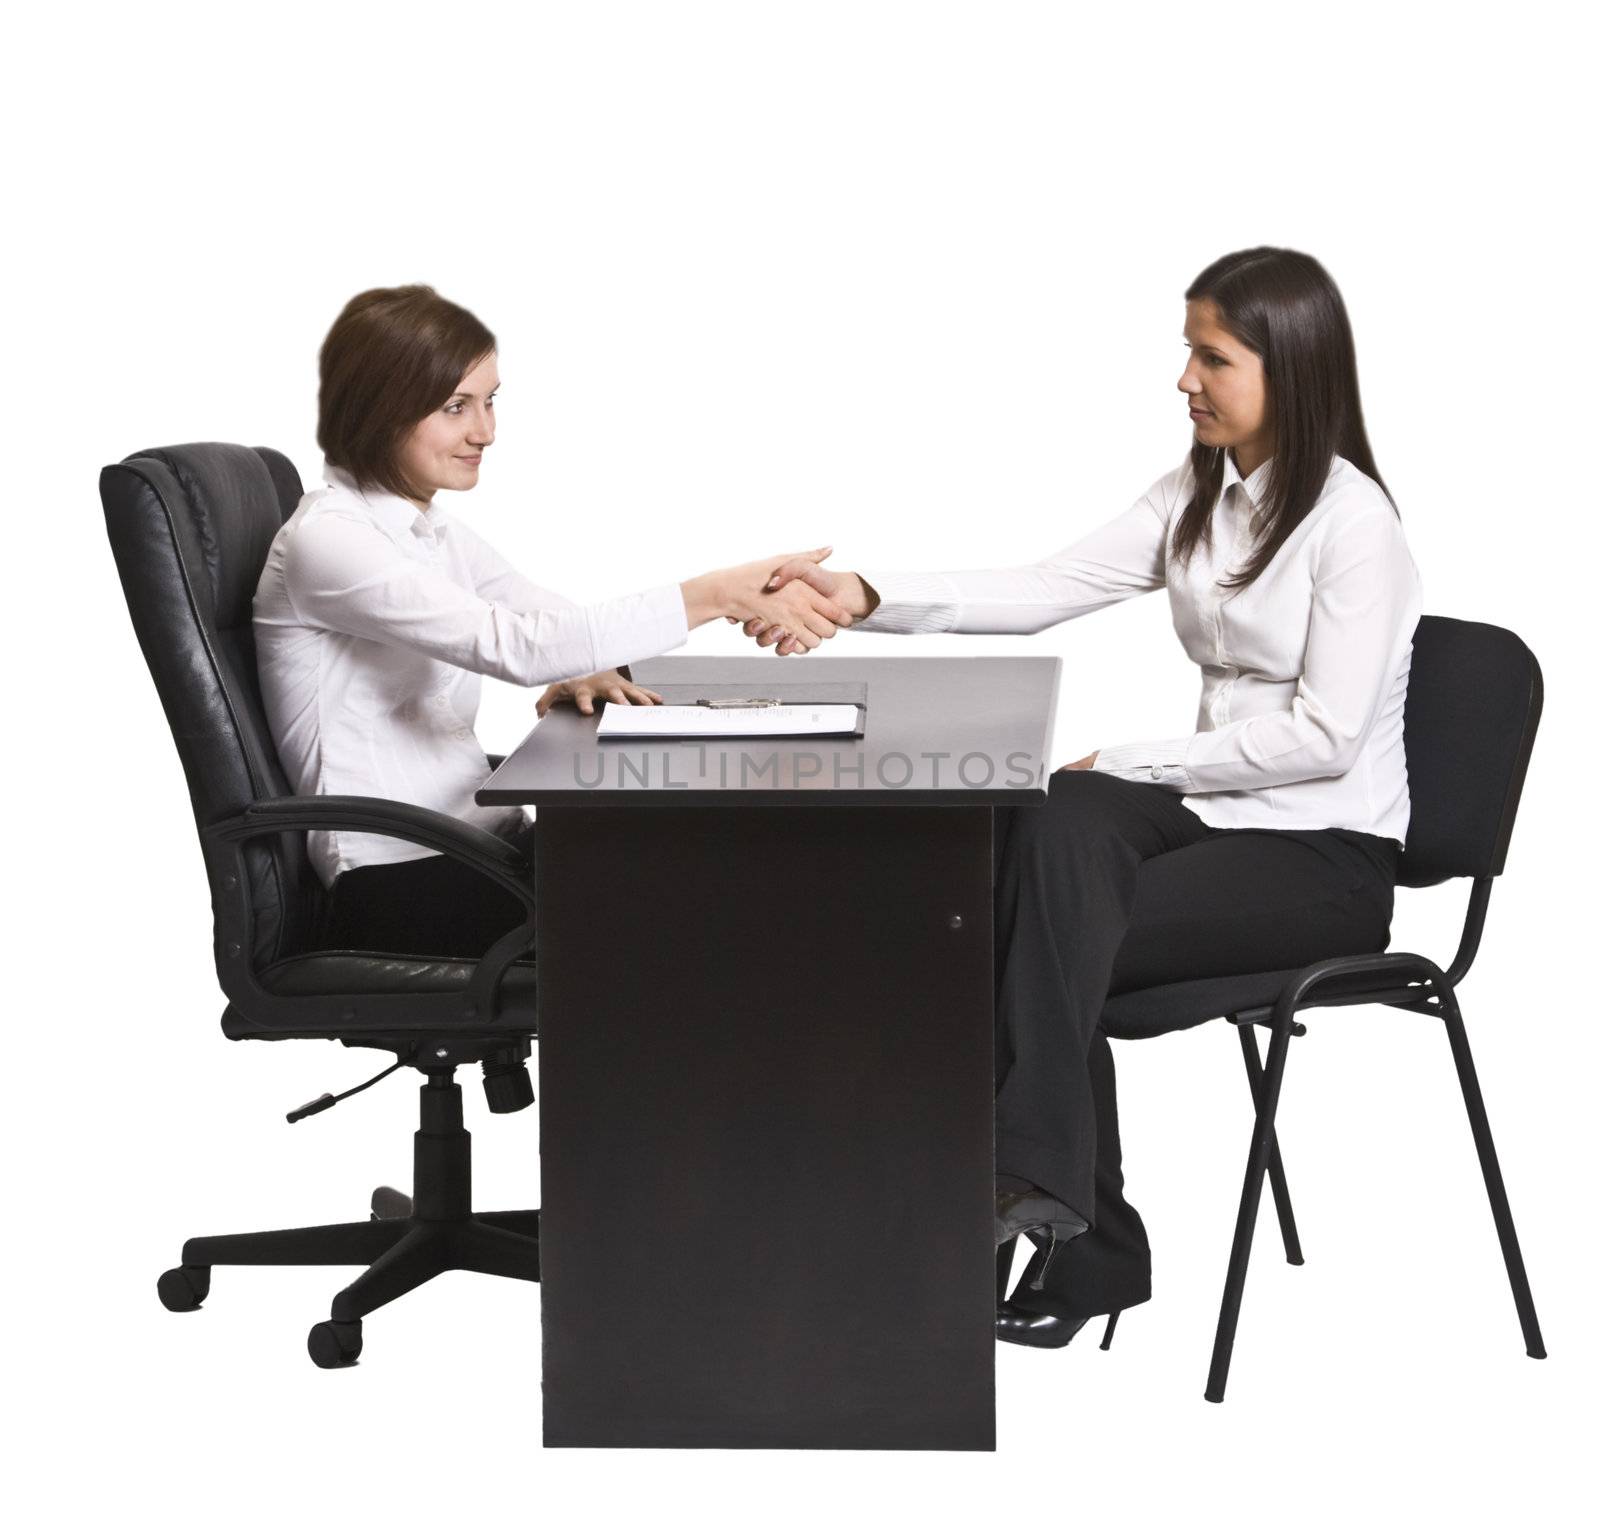 Two businesswomen shaking hands over the office desk.